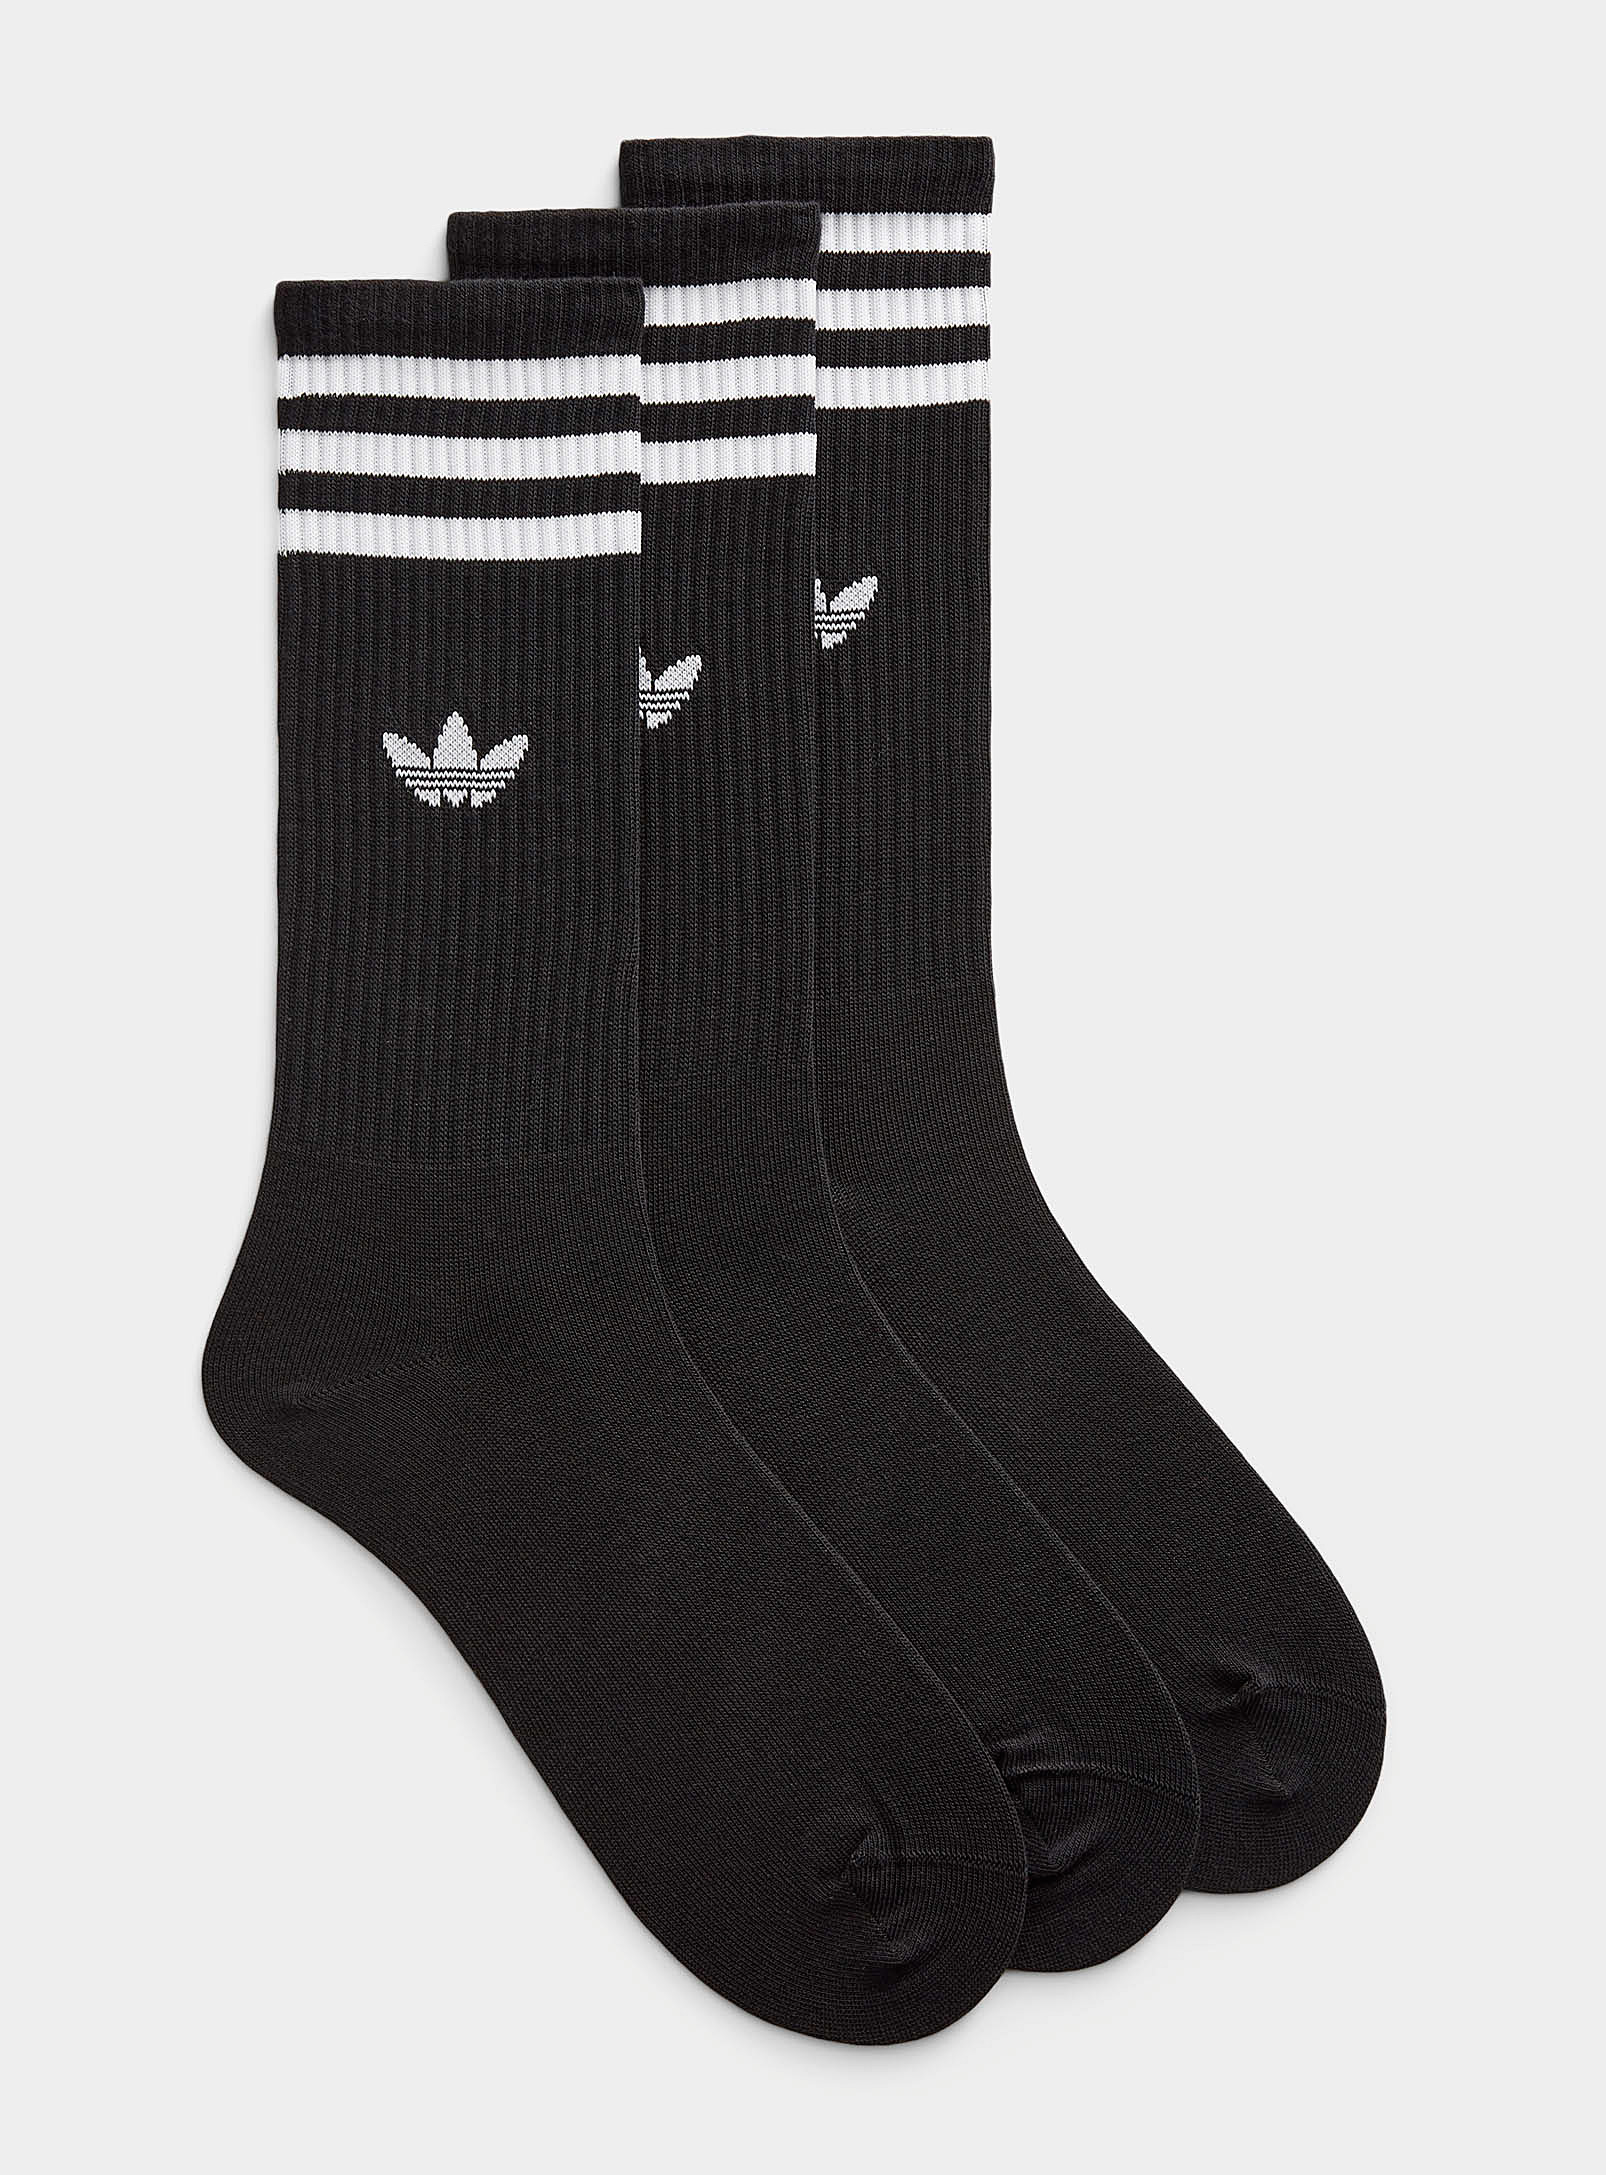 Adidas Originals - Les chaussettes athlétiques rayures signatures Emballage de 3